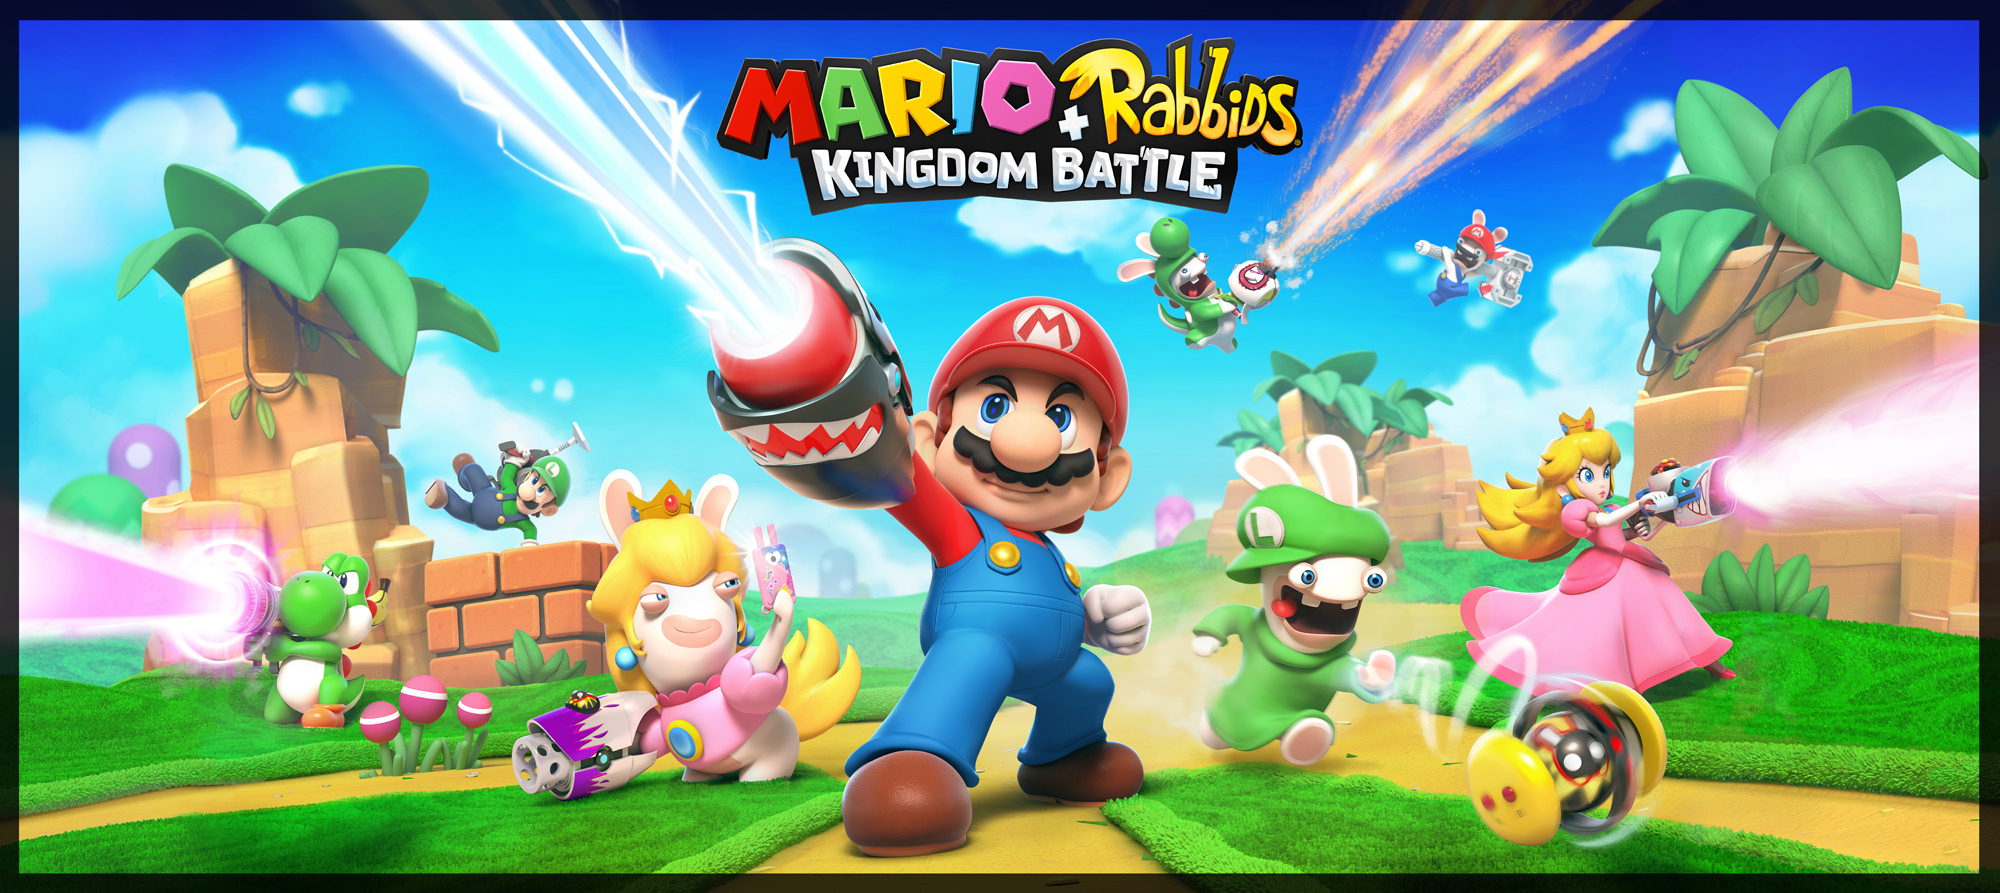 List of weapons in Mario + Rabbids Kingdom Battle - Super Mario